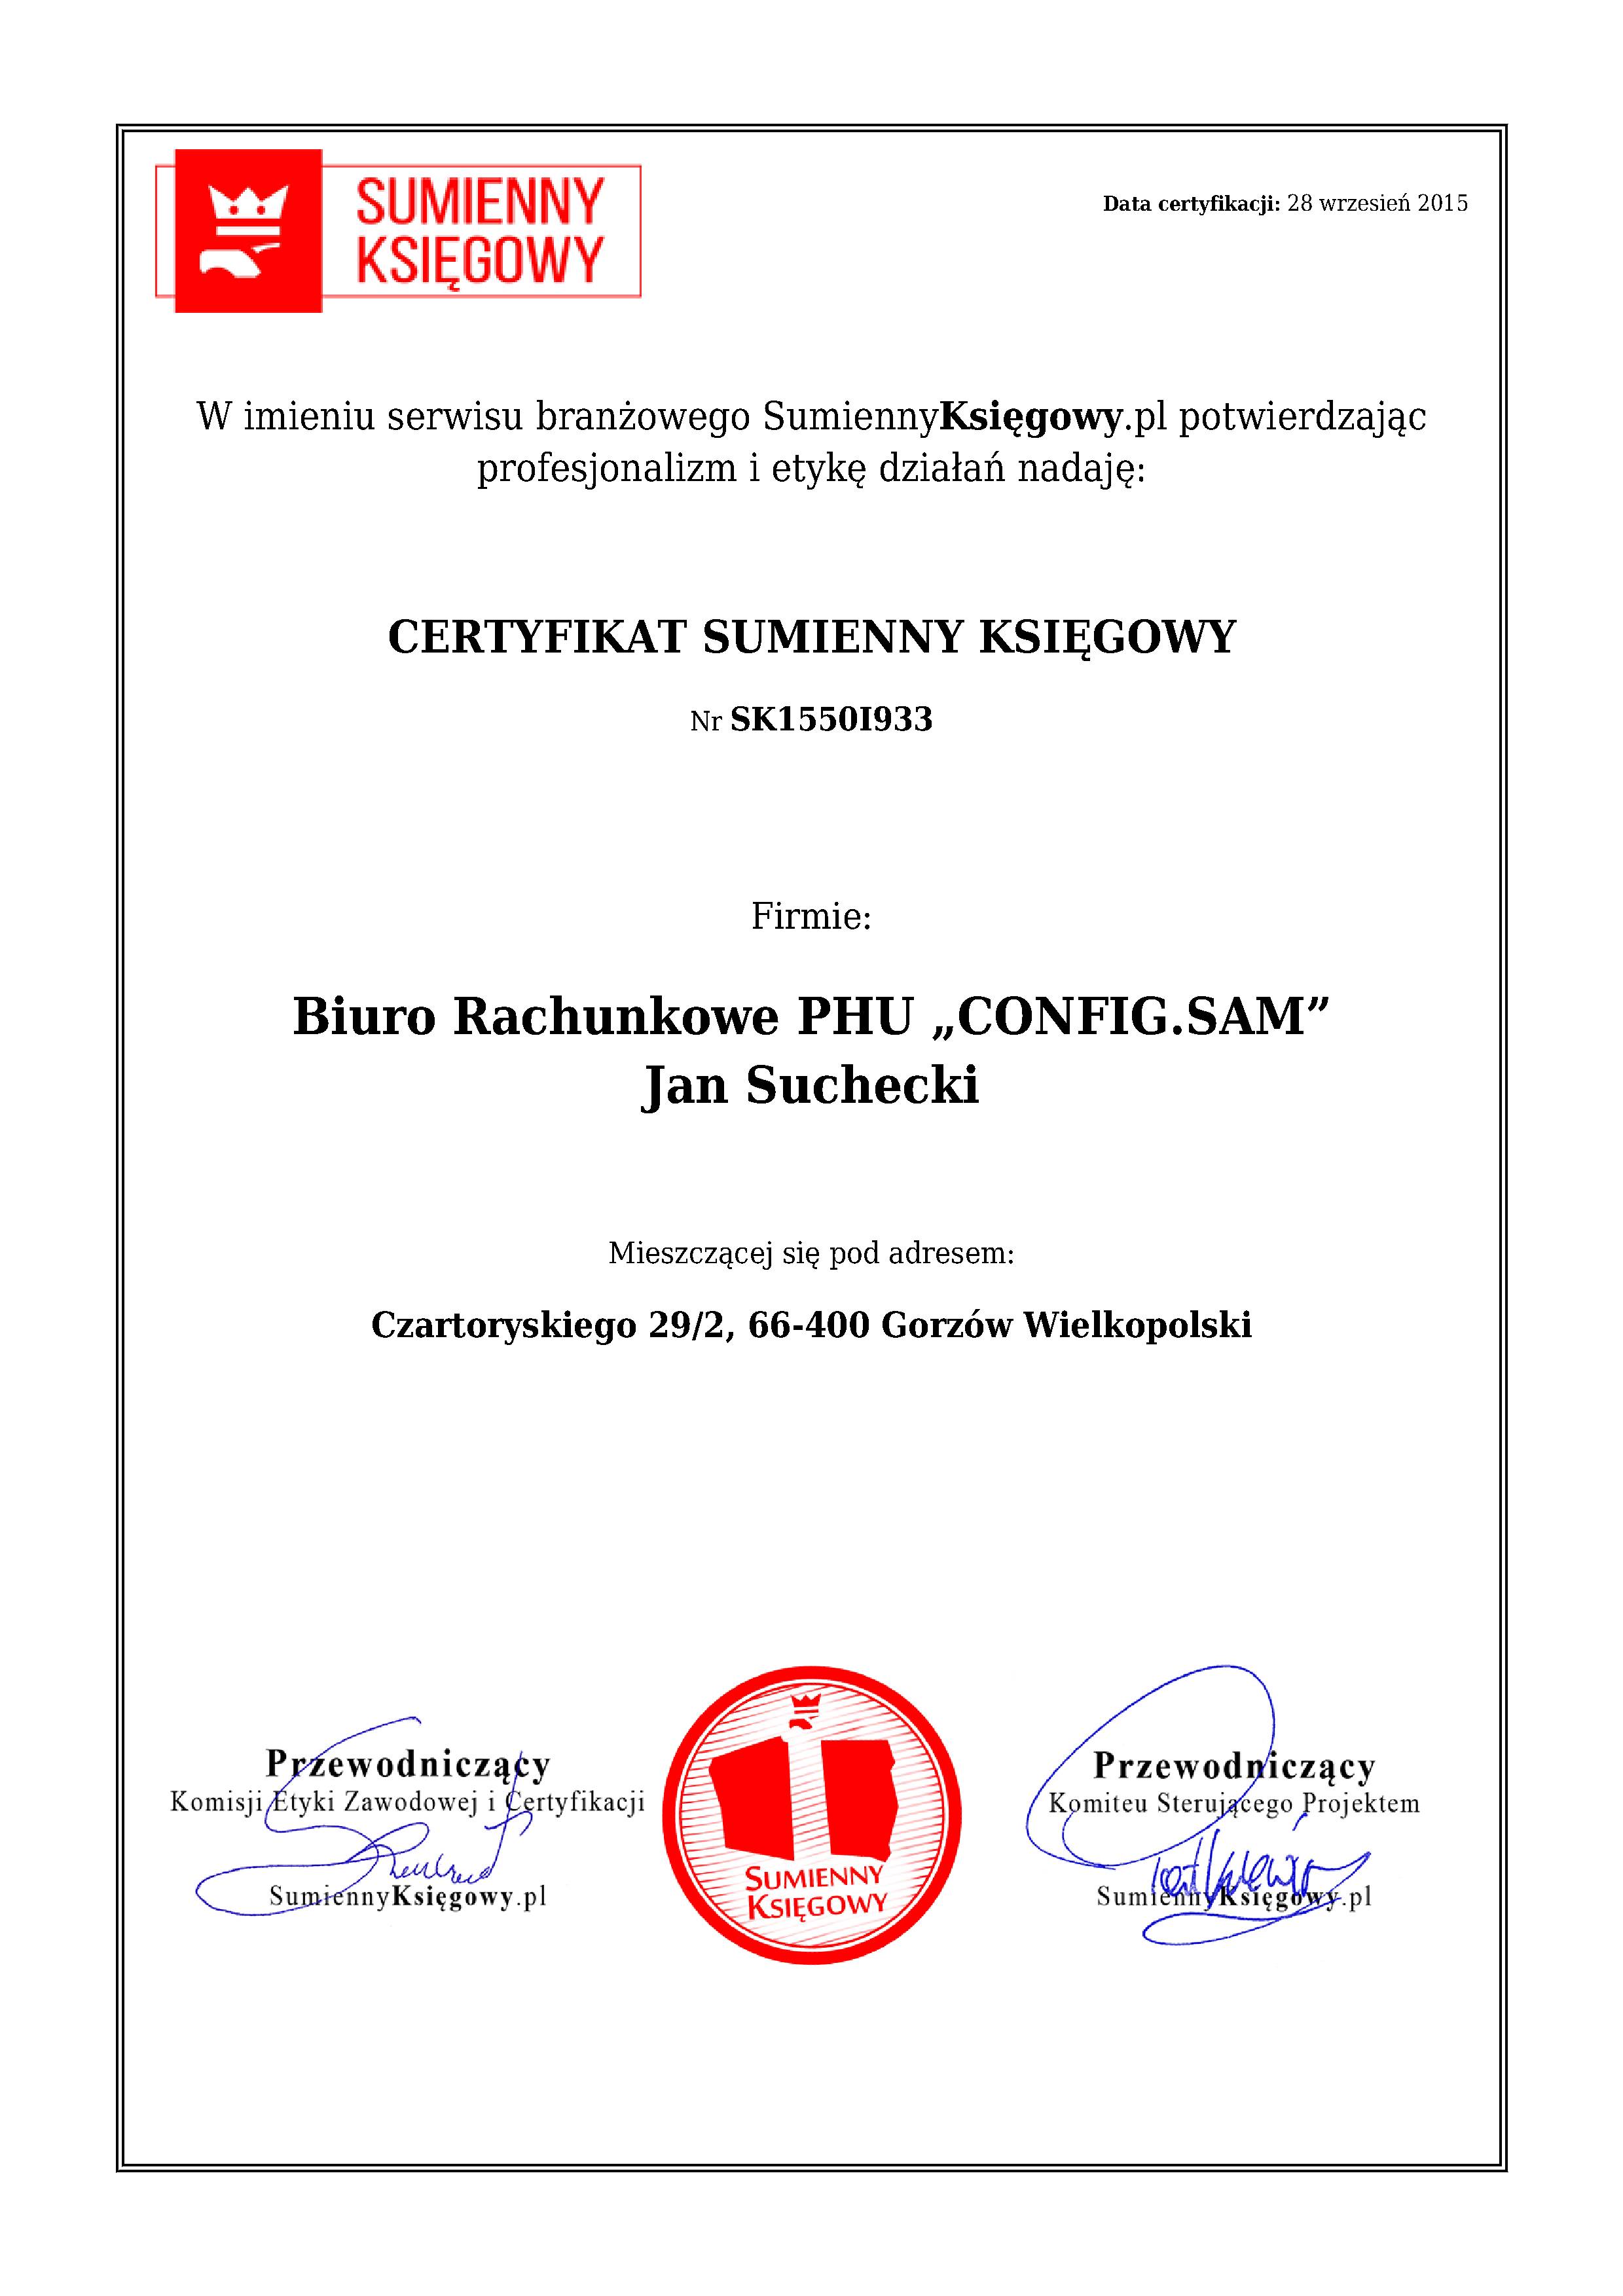 Biuro Rachunkowe PHU „CONFIG.SAM” Jan Suchecki certyfikat 1